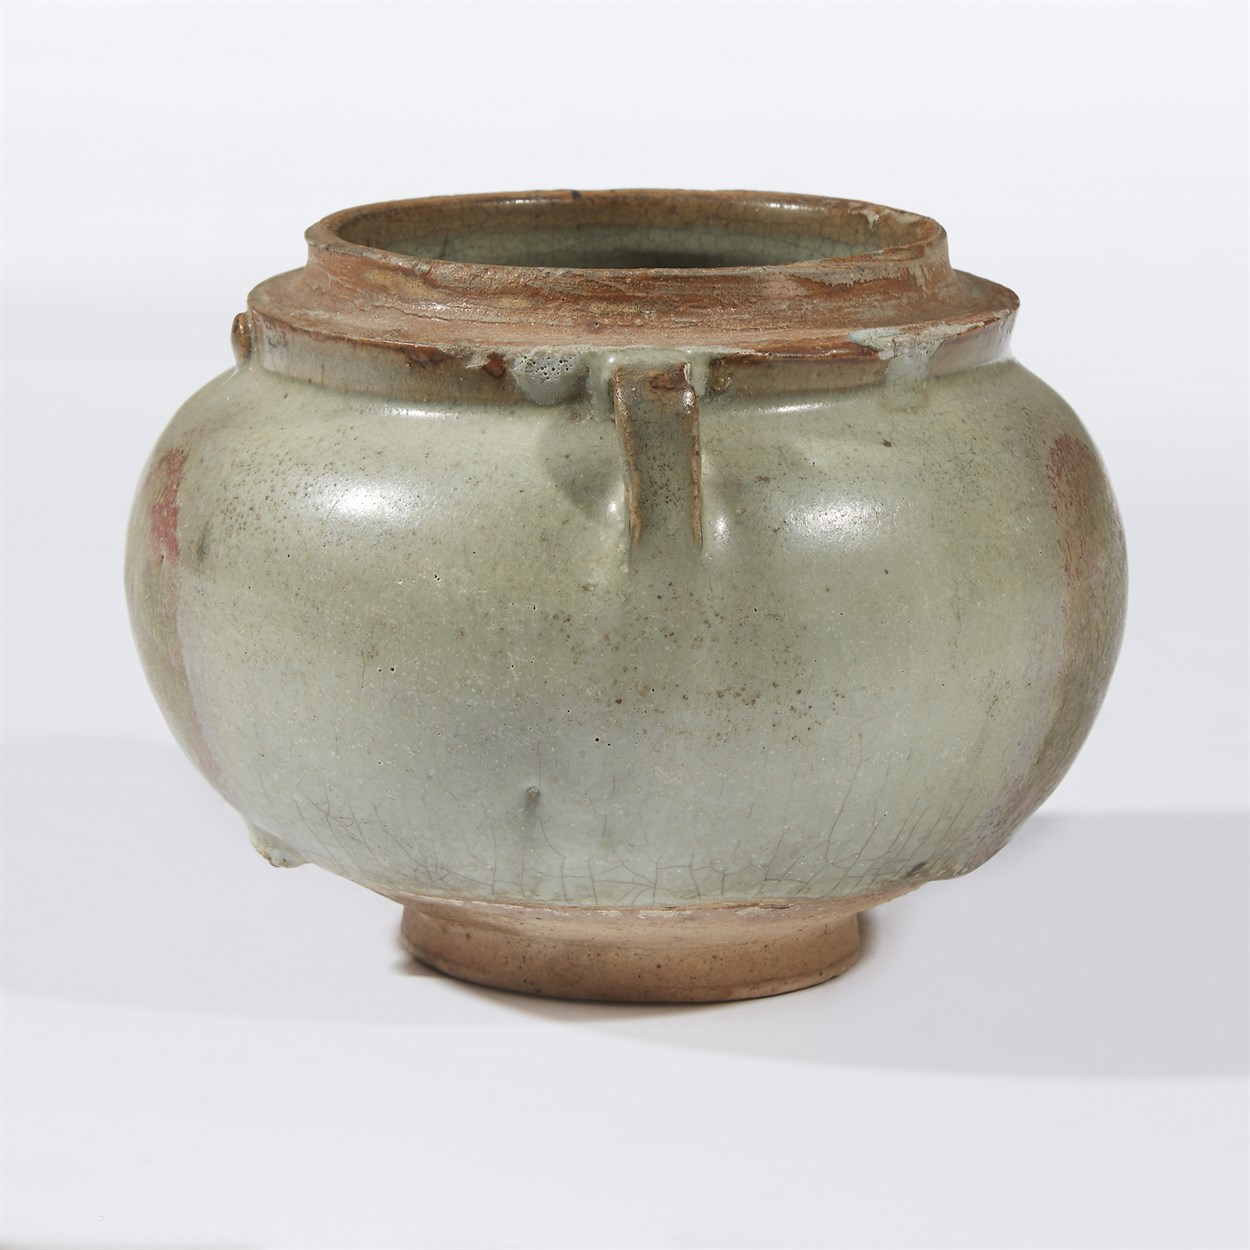 Lot 56 - A Chinese copper-splashed pale green-blue glazed junyao jar